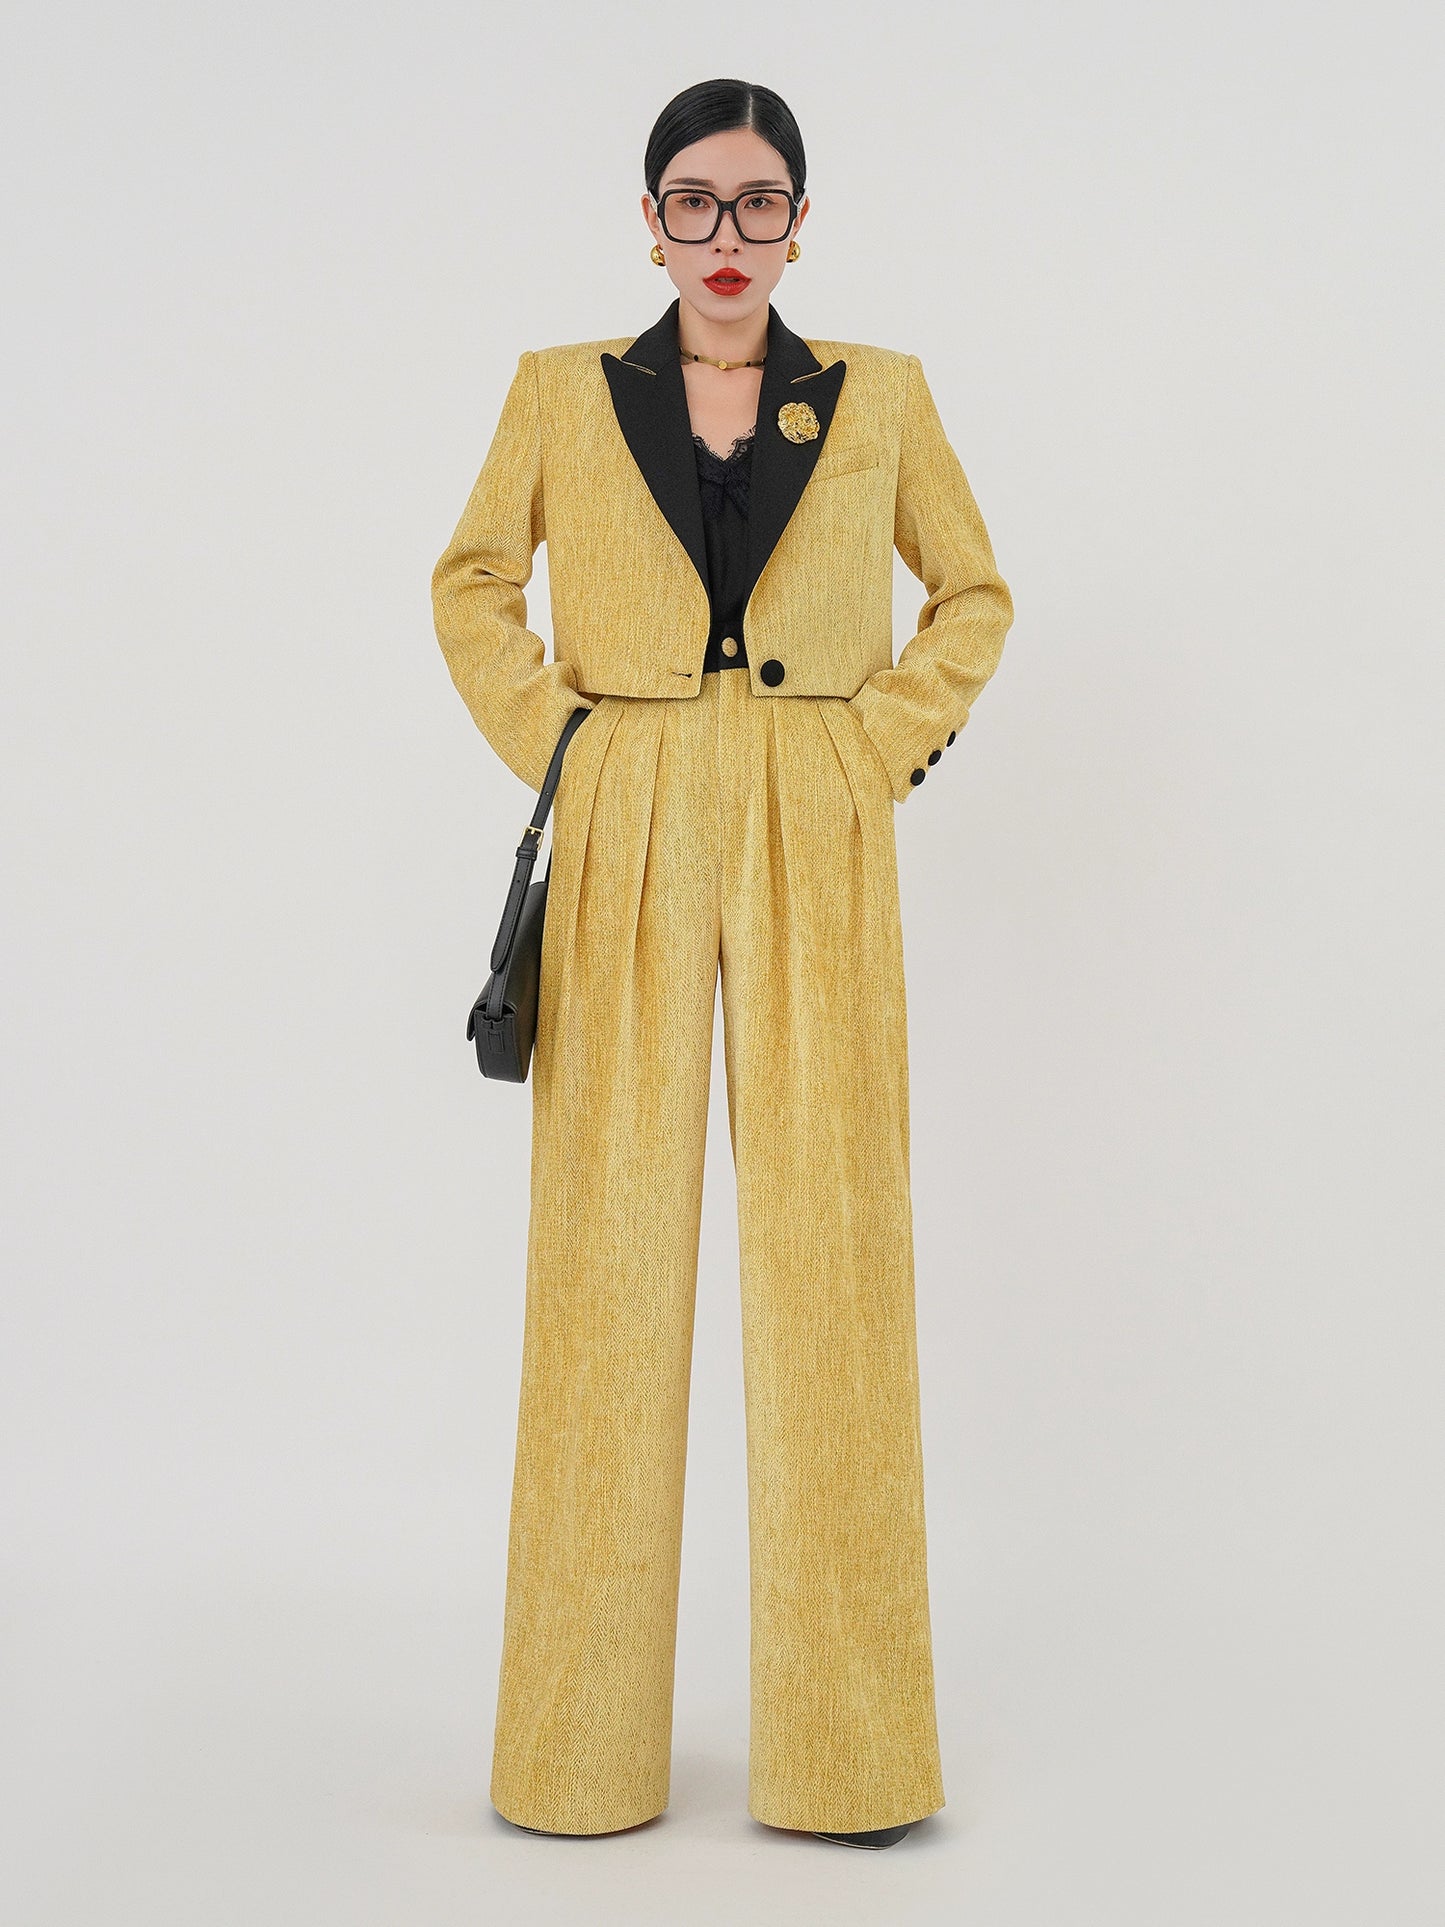 Huanzi herringbone blazer short jacket women's two-piece suit -Iriou